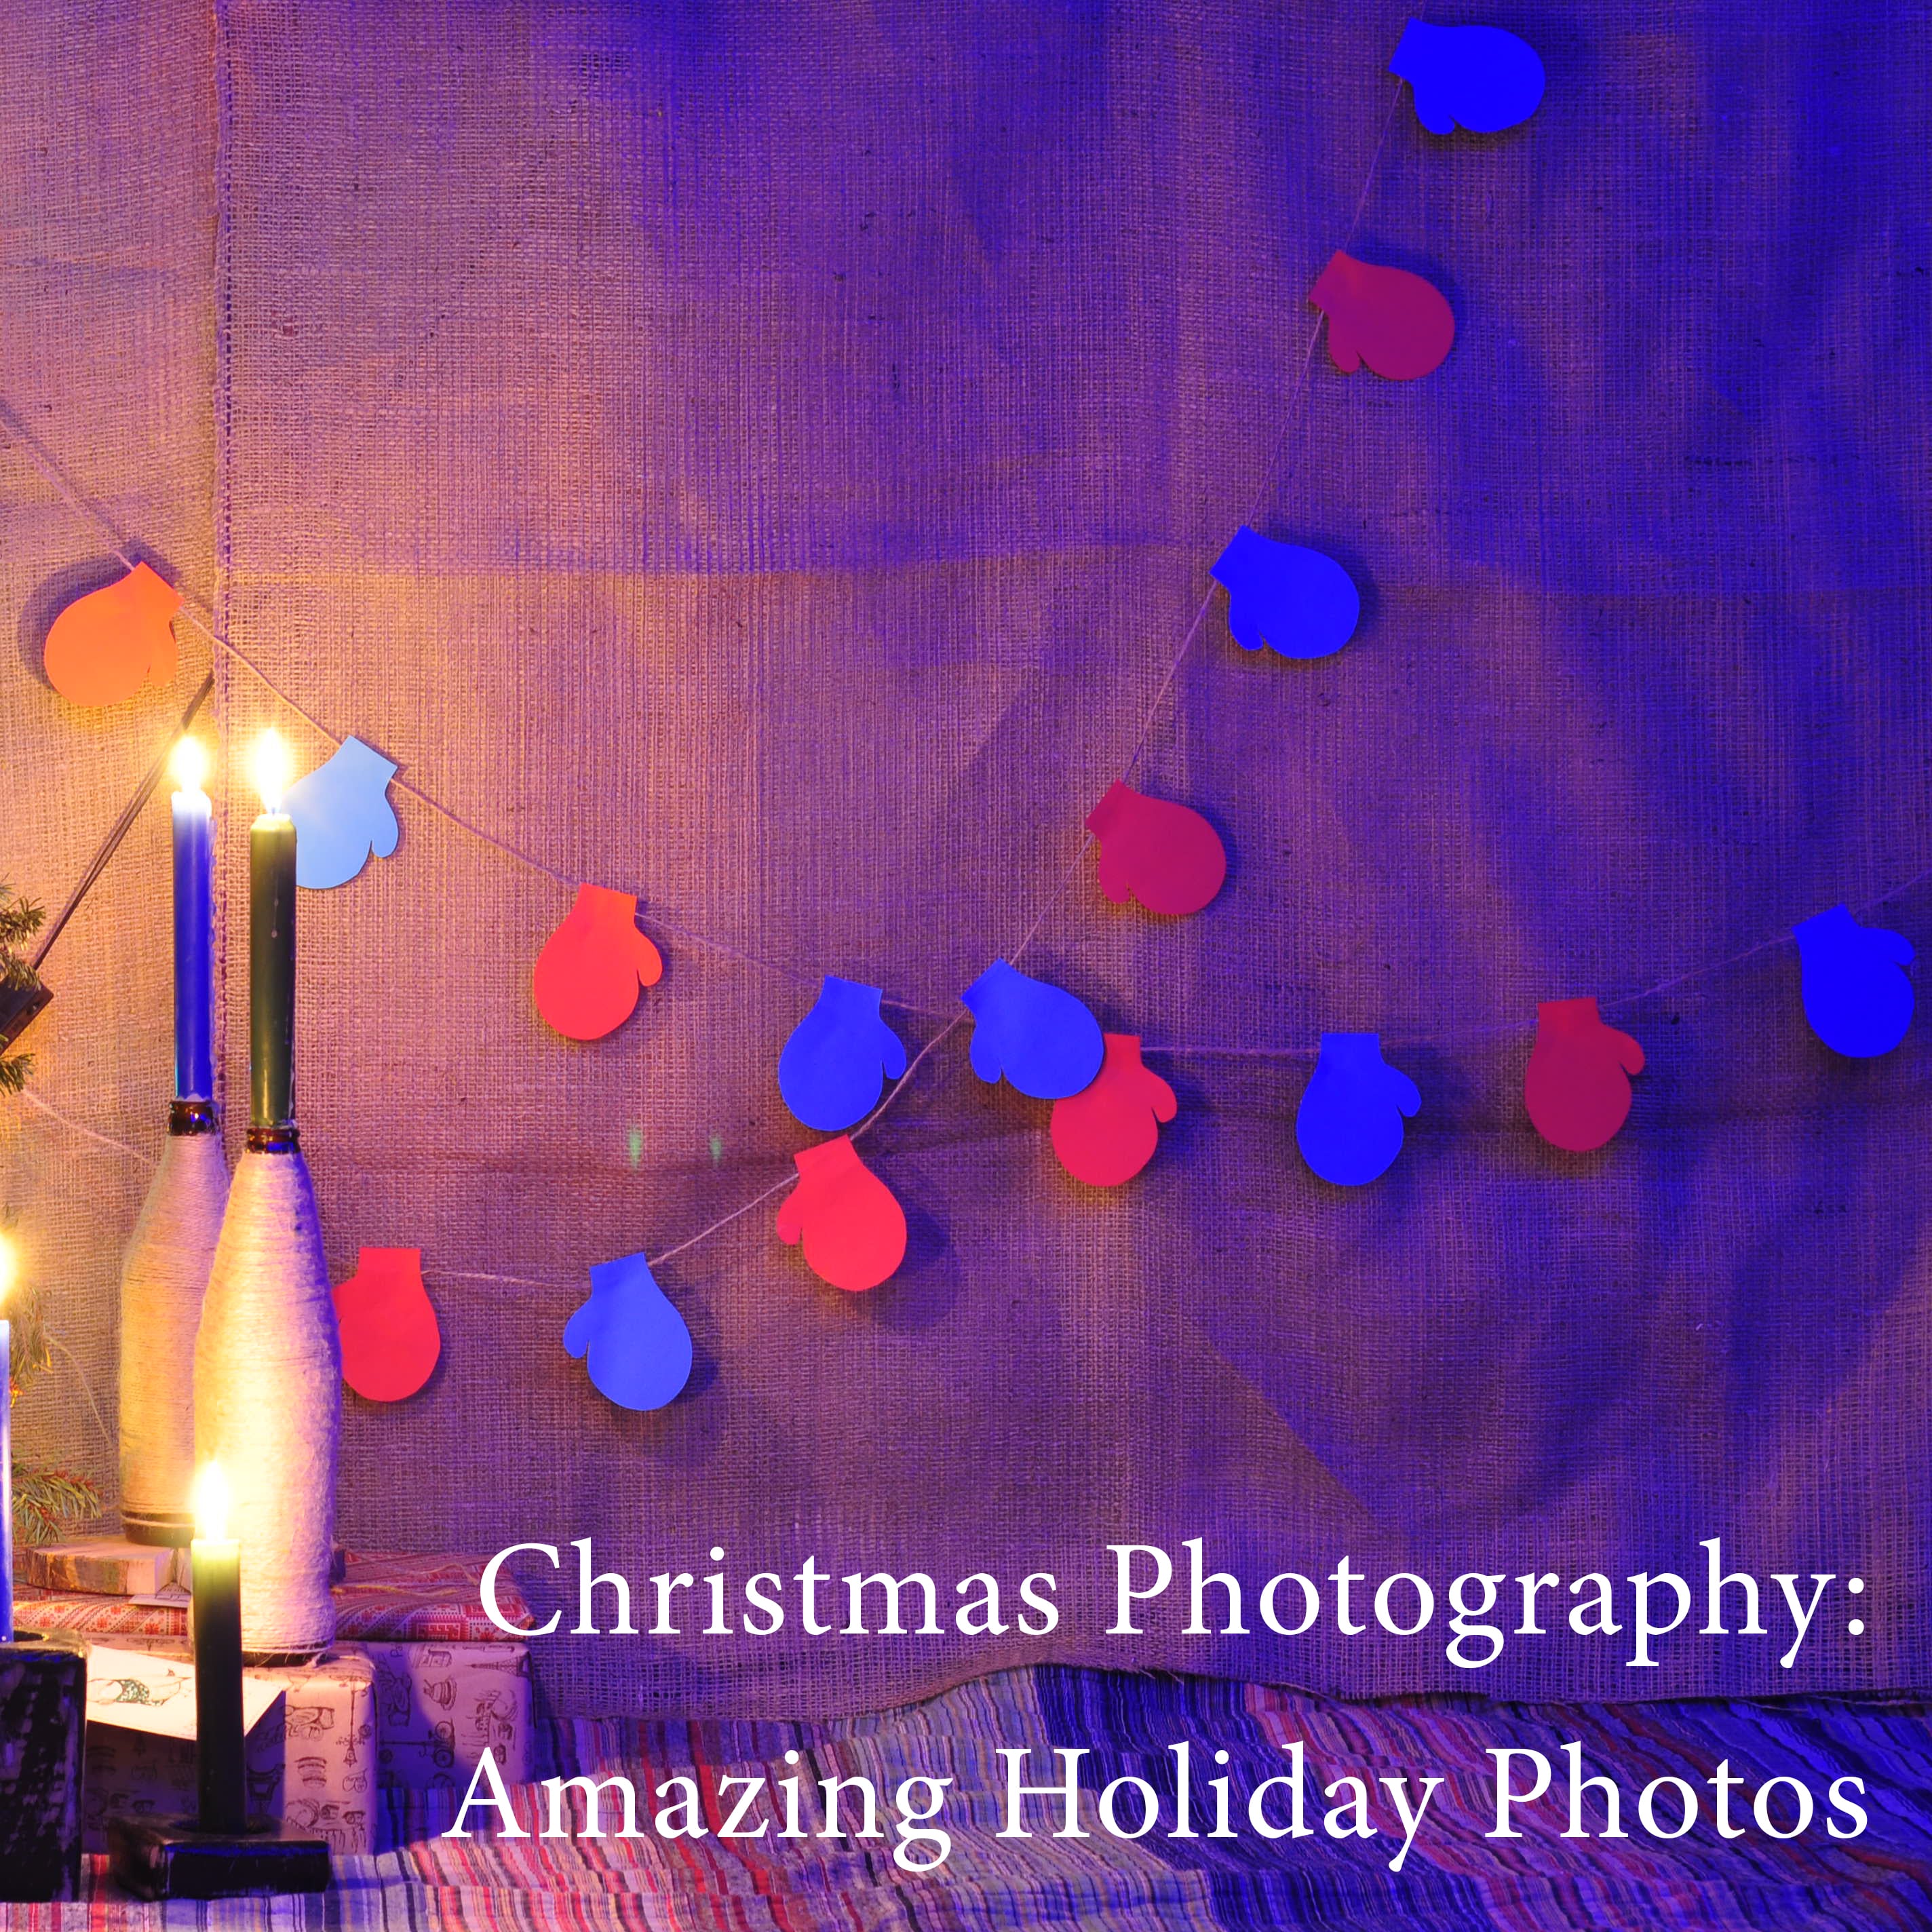 Christmas Photography: Amazing Holiday Photos cover image.